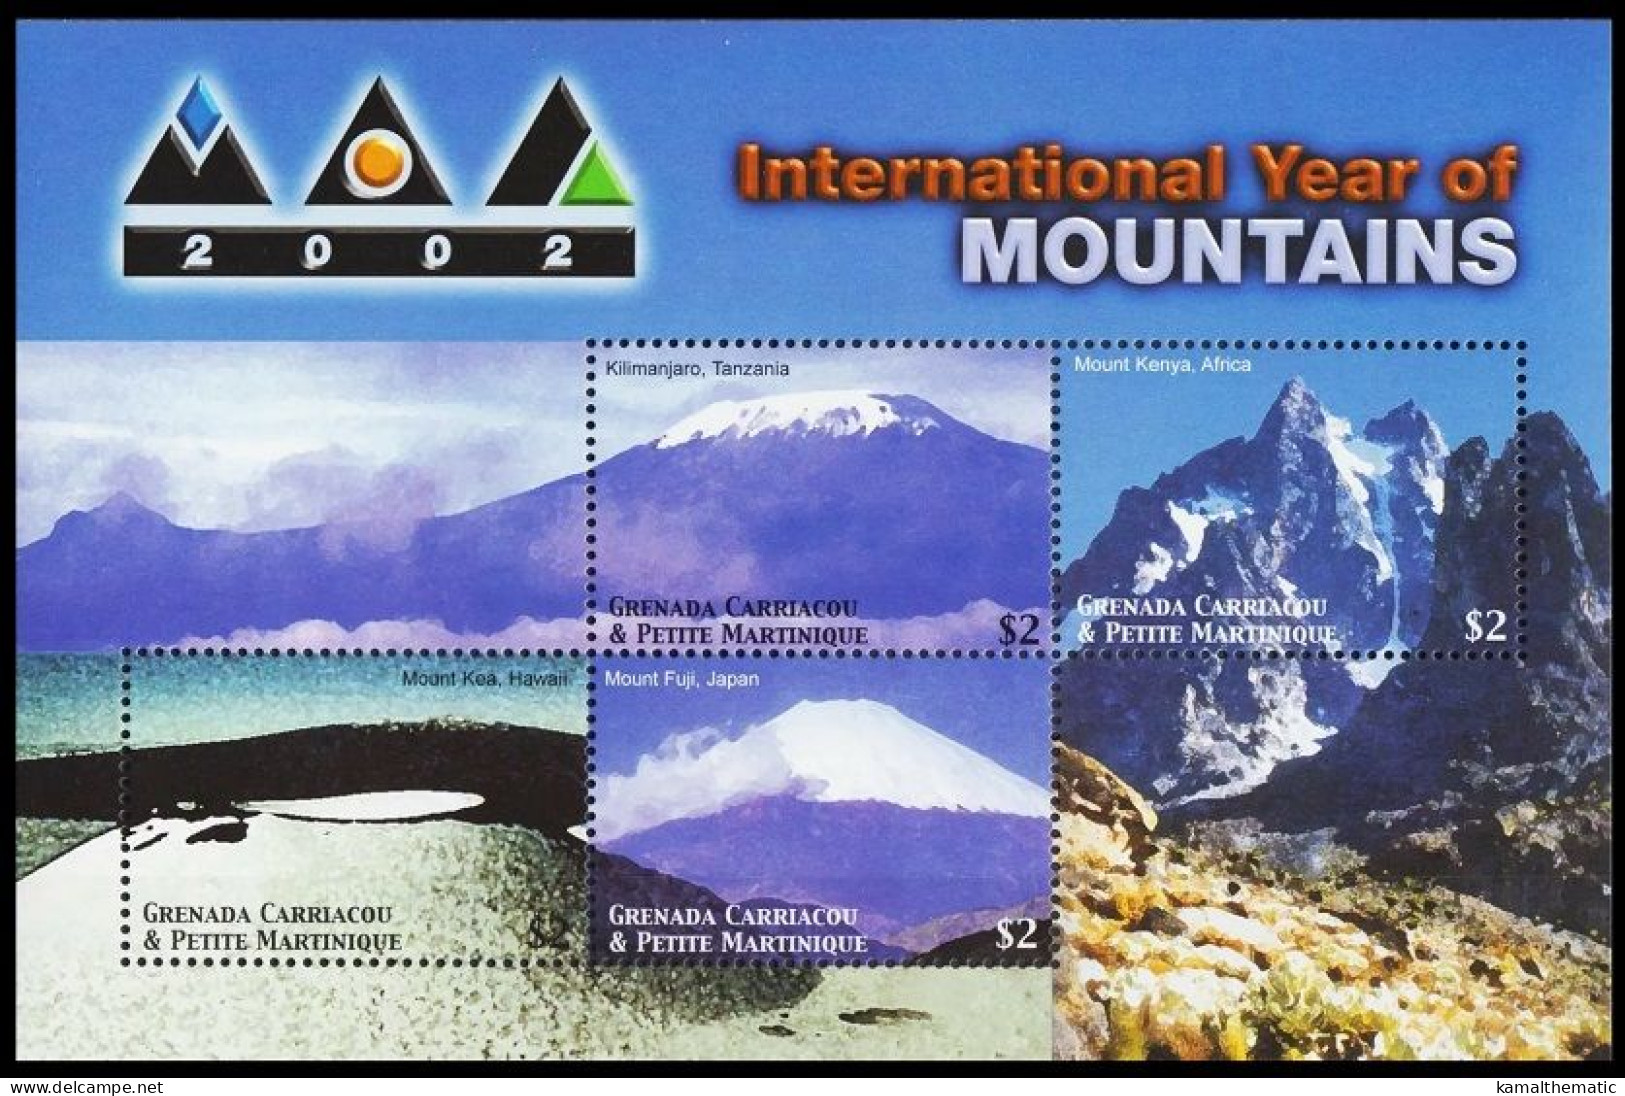 Grenada Ca & Pe Martinique 2002 MNH SS, Mountains Kilimanjaro, Fuji, Kenya, Kea, Volcanoes - Montagnes